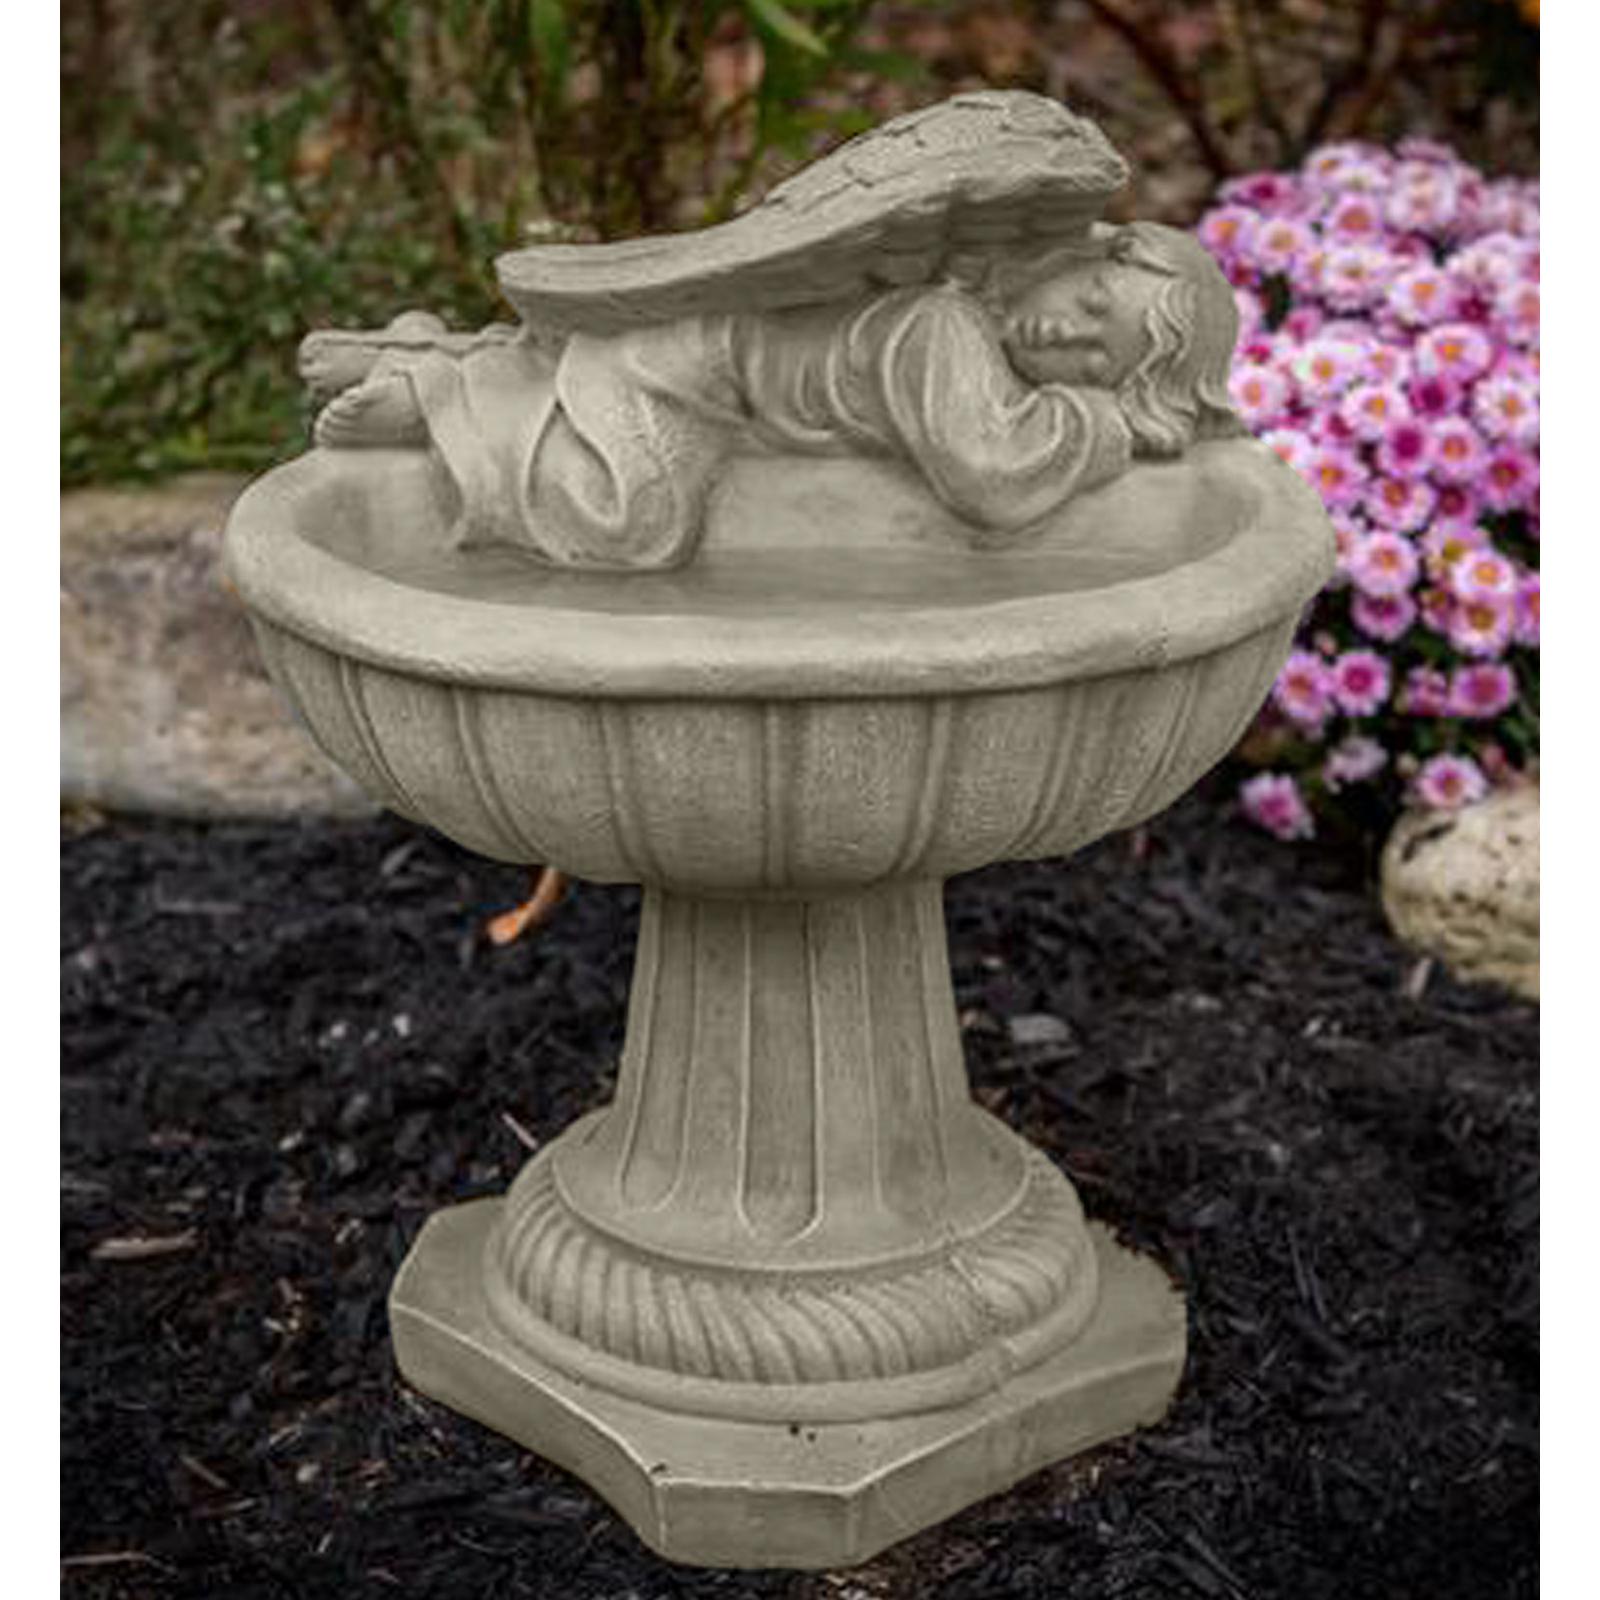 Athena Garden Cast Stone Heavenly Angel Bird Bath - image 2 of 2